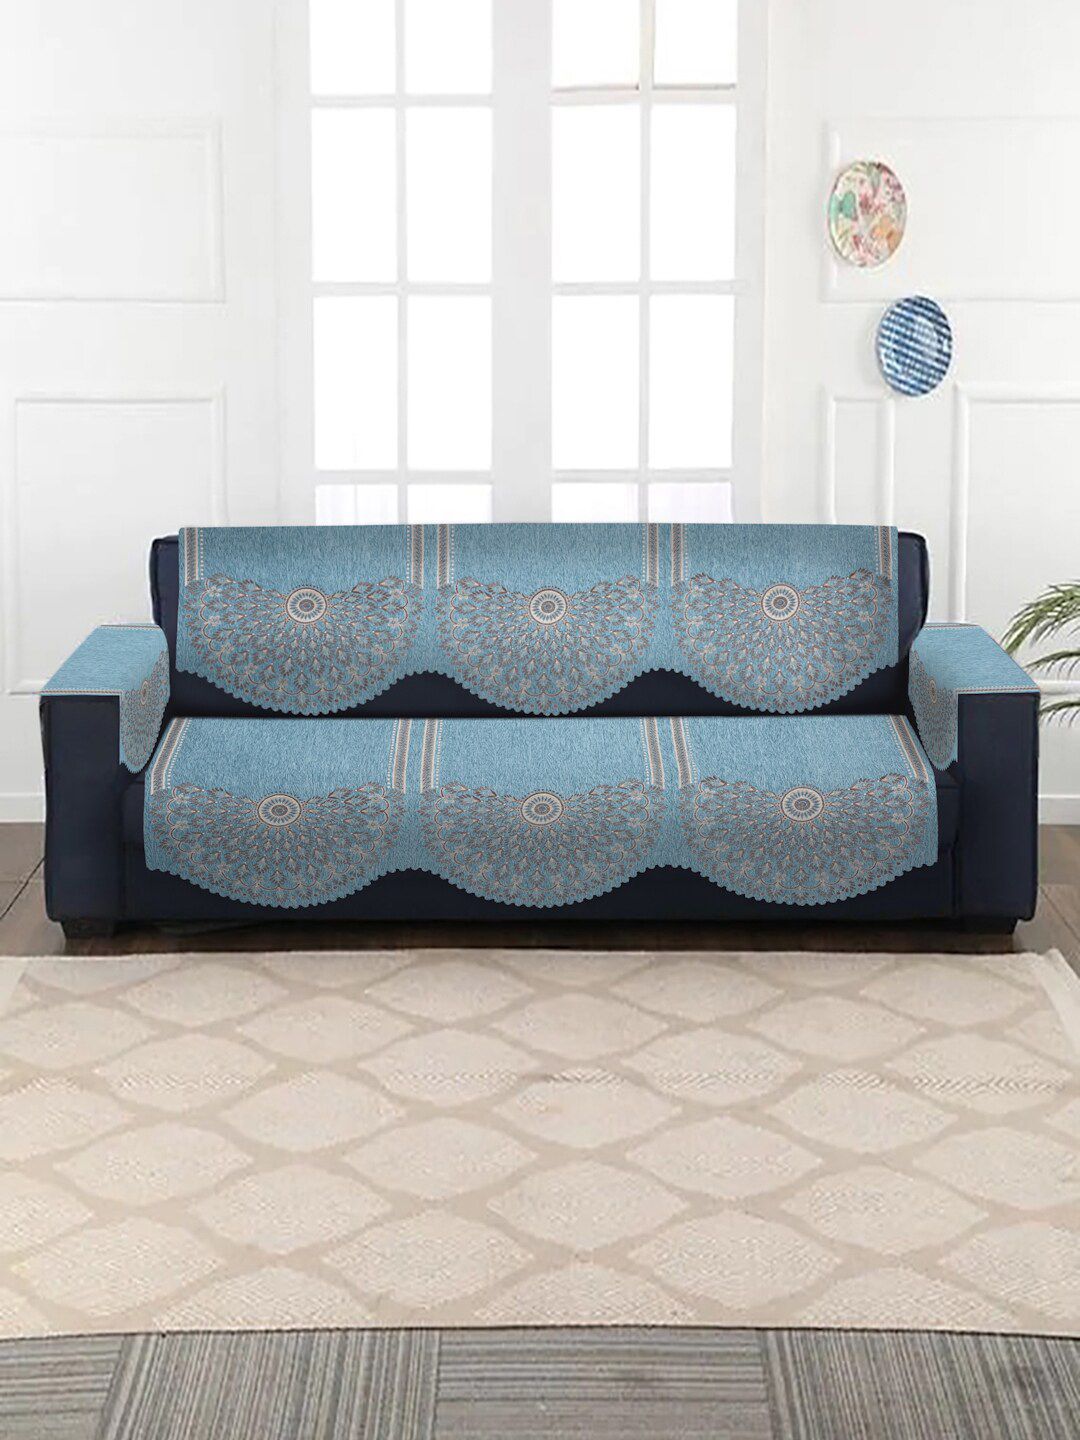 HOSTA HOMES Blue & White Self Design Jacquard Velvet 5 Seater Sofa Cover-16 Pieces Price in India